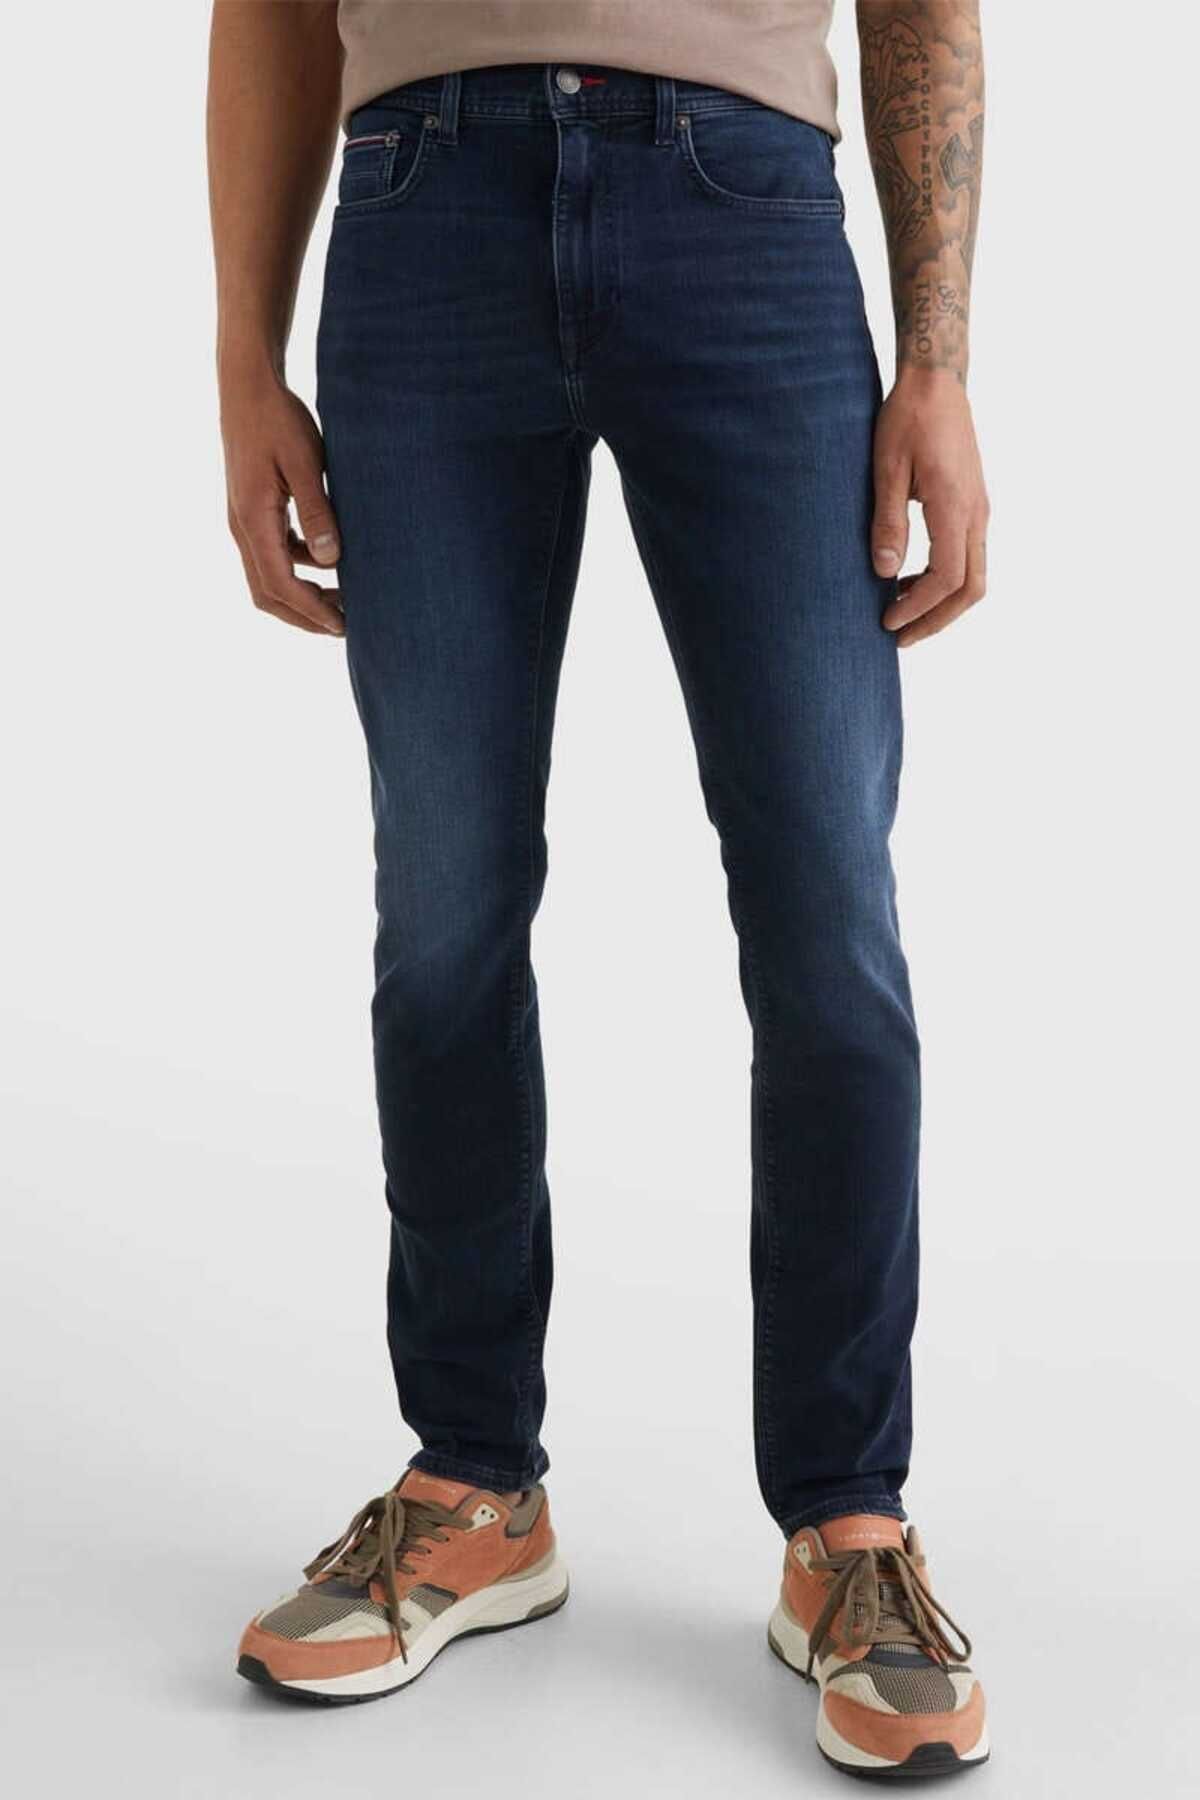 Tommy Hilfiger Erkek Denim Normal Belli Düz Model Günlük Kullanım Mavi Jeans MW0MW15593-1CS